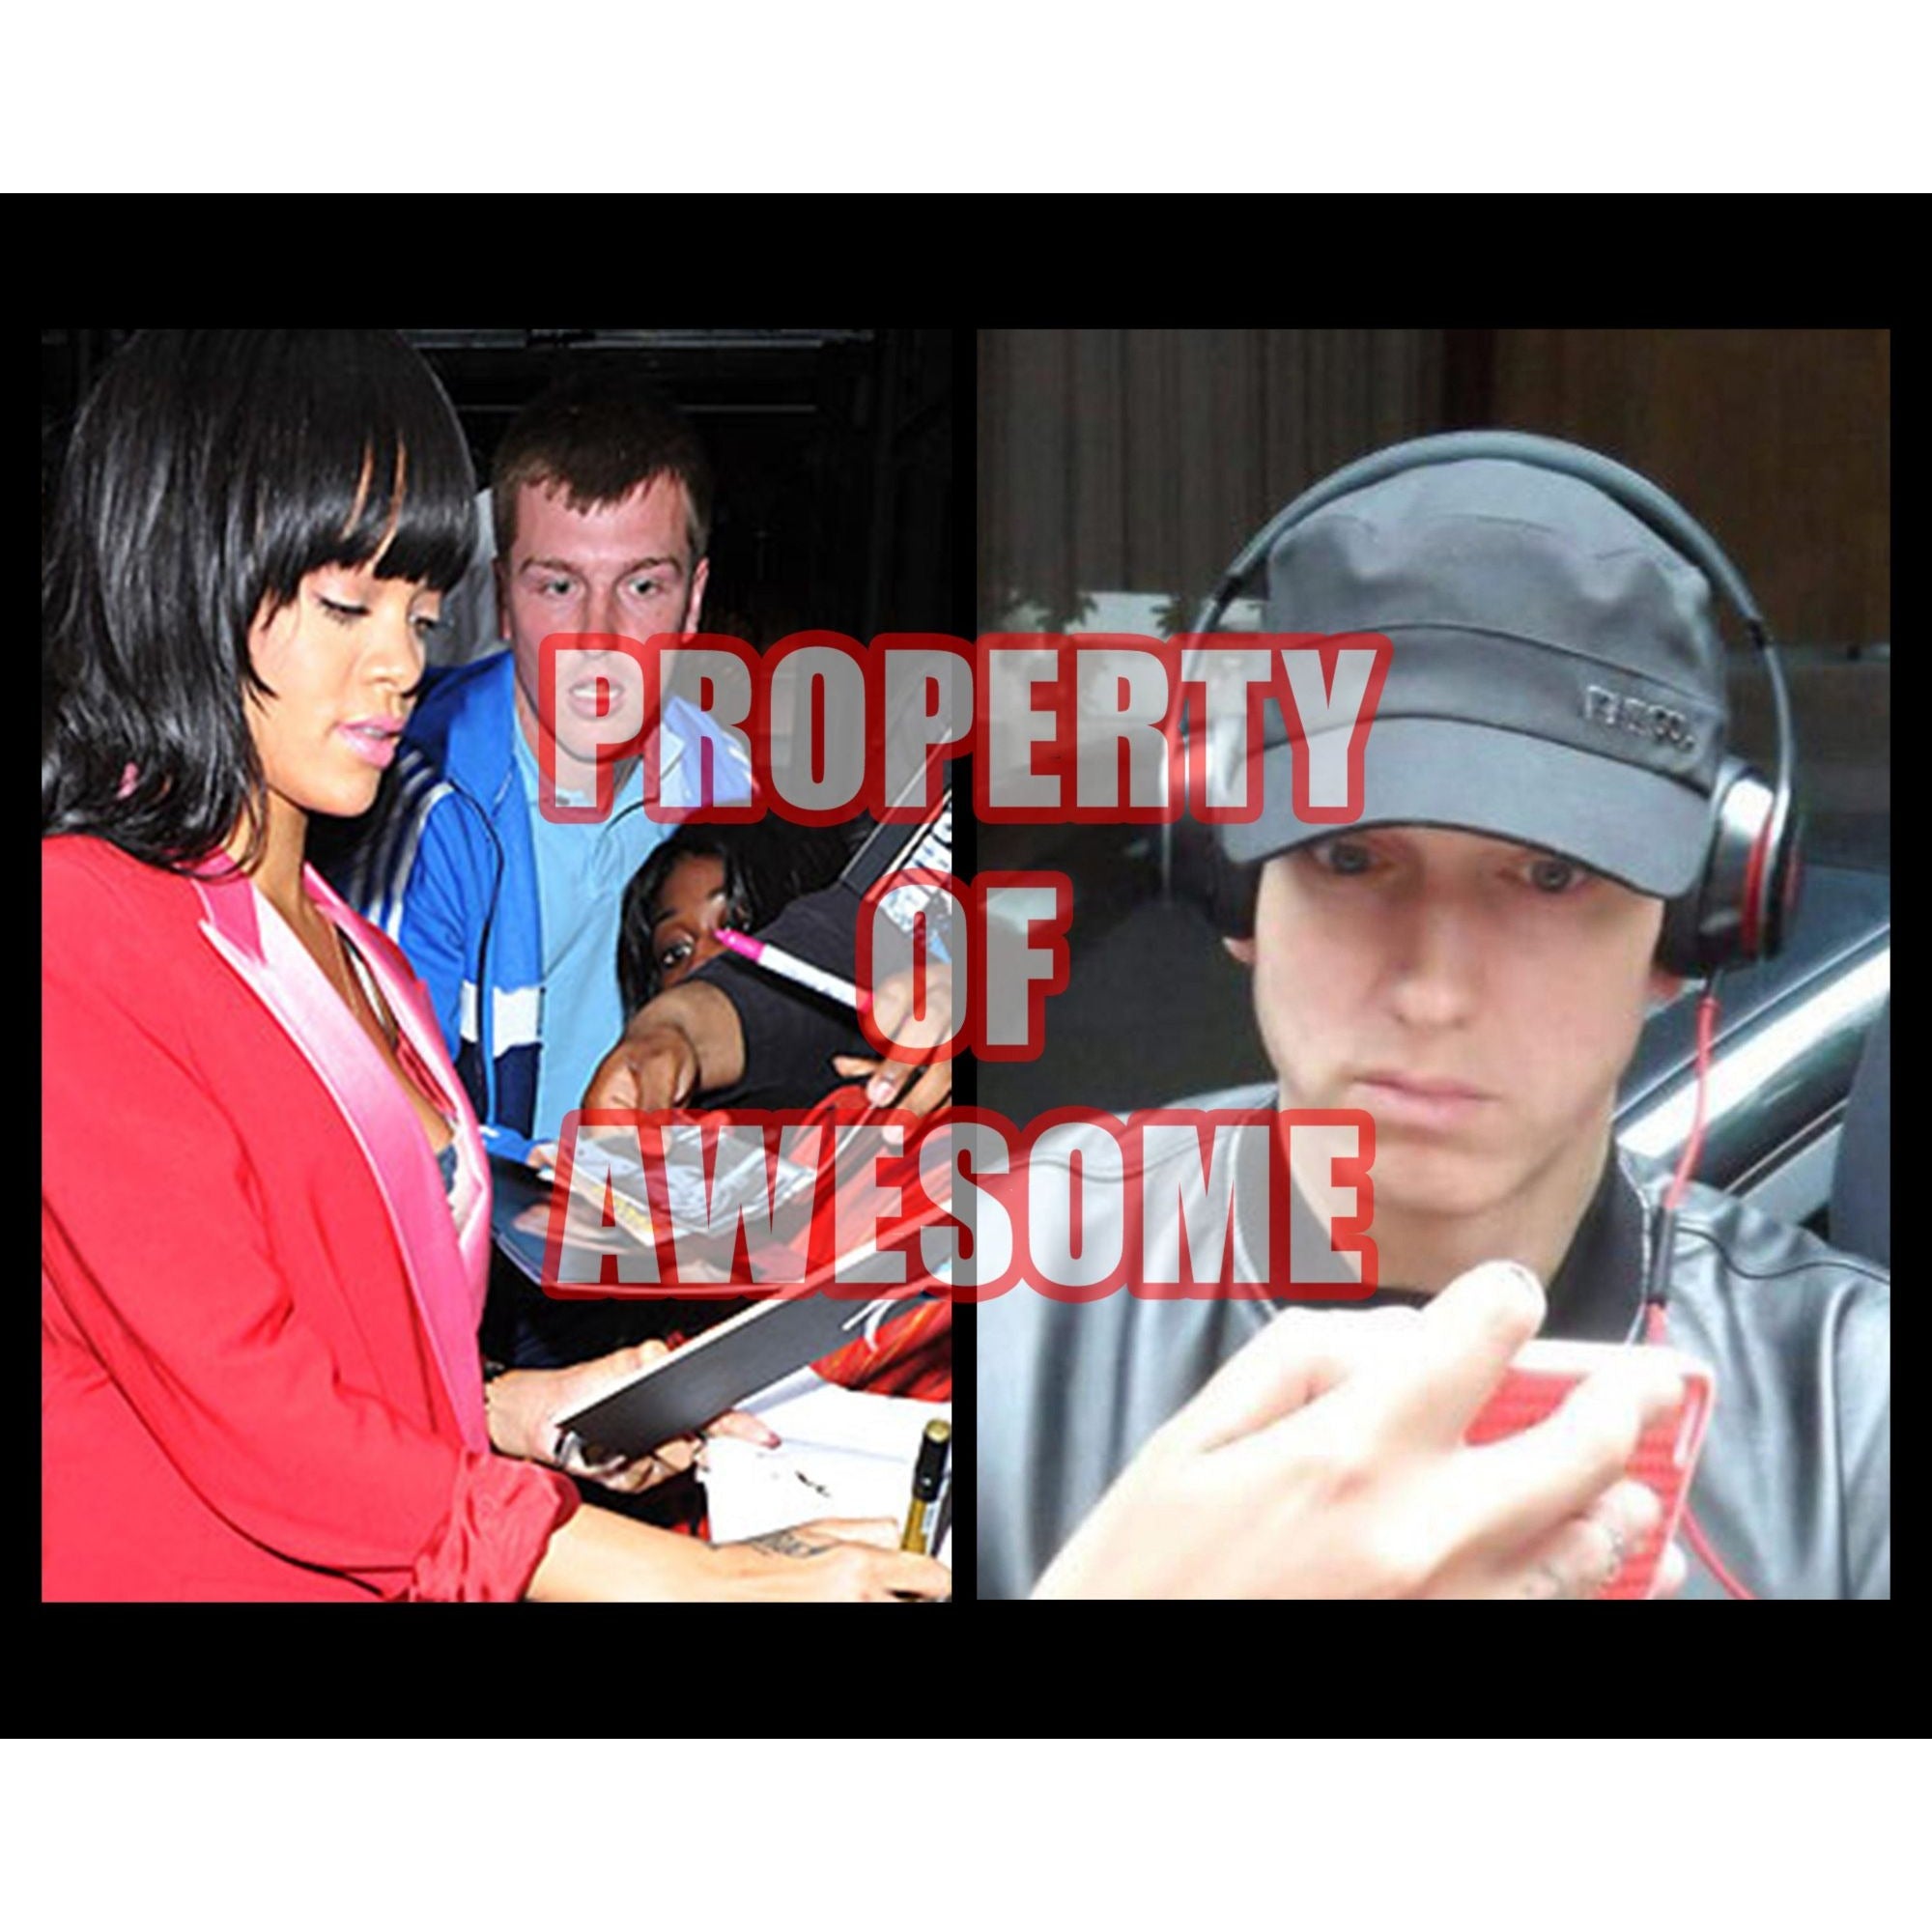 Eminem Marshall Mathers and Robyn Rihanna Fenty 8x10 signed photo with proof